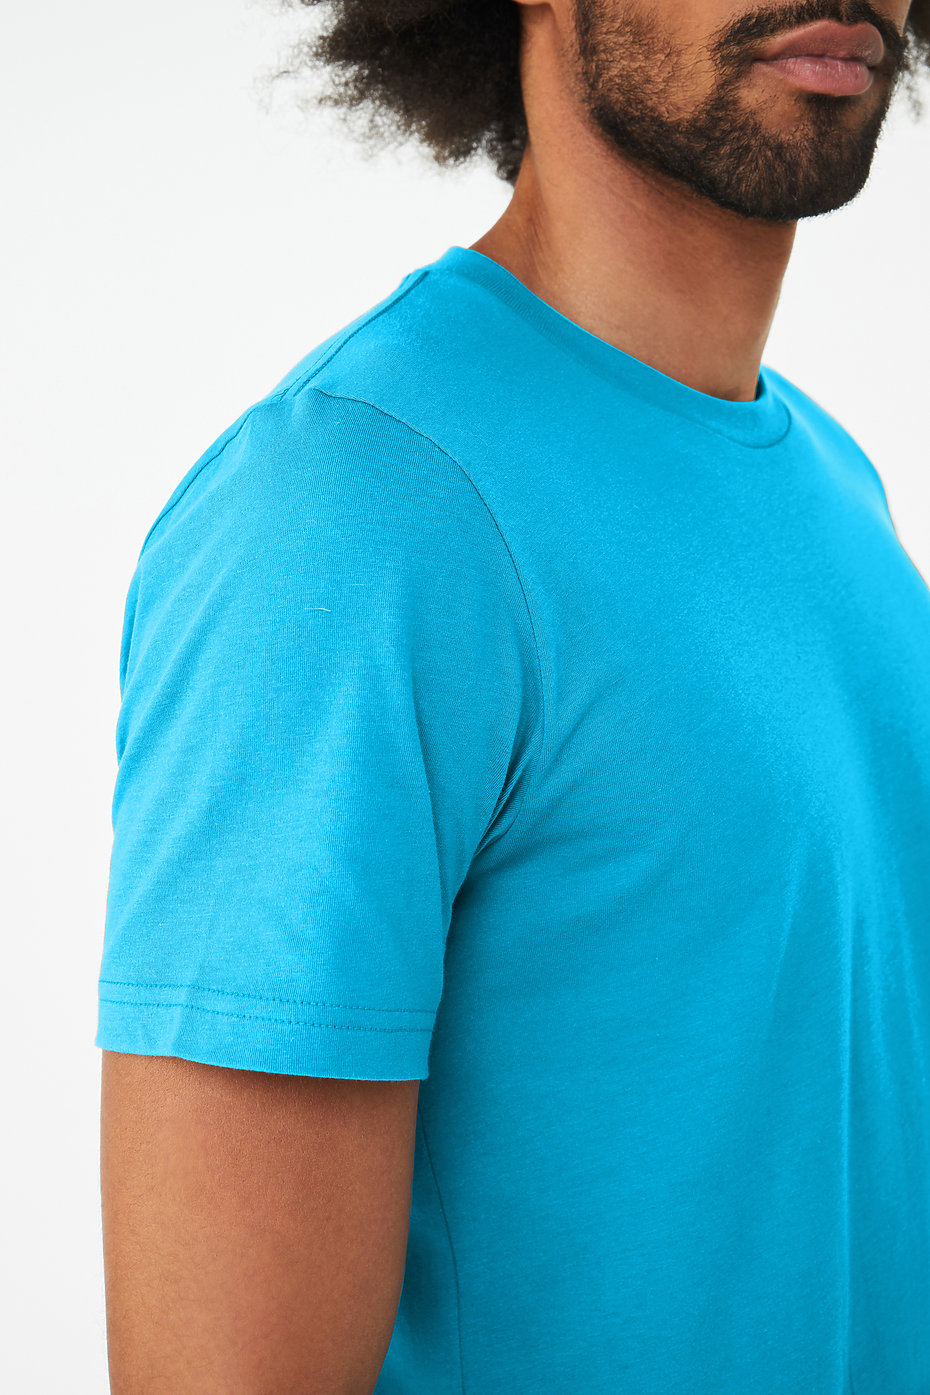 New! Lucky Brand 100% Cotton T-Shirt color blue beige size M